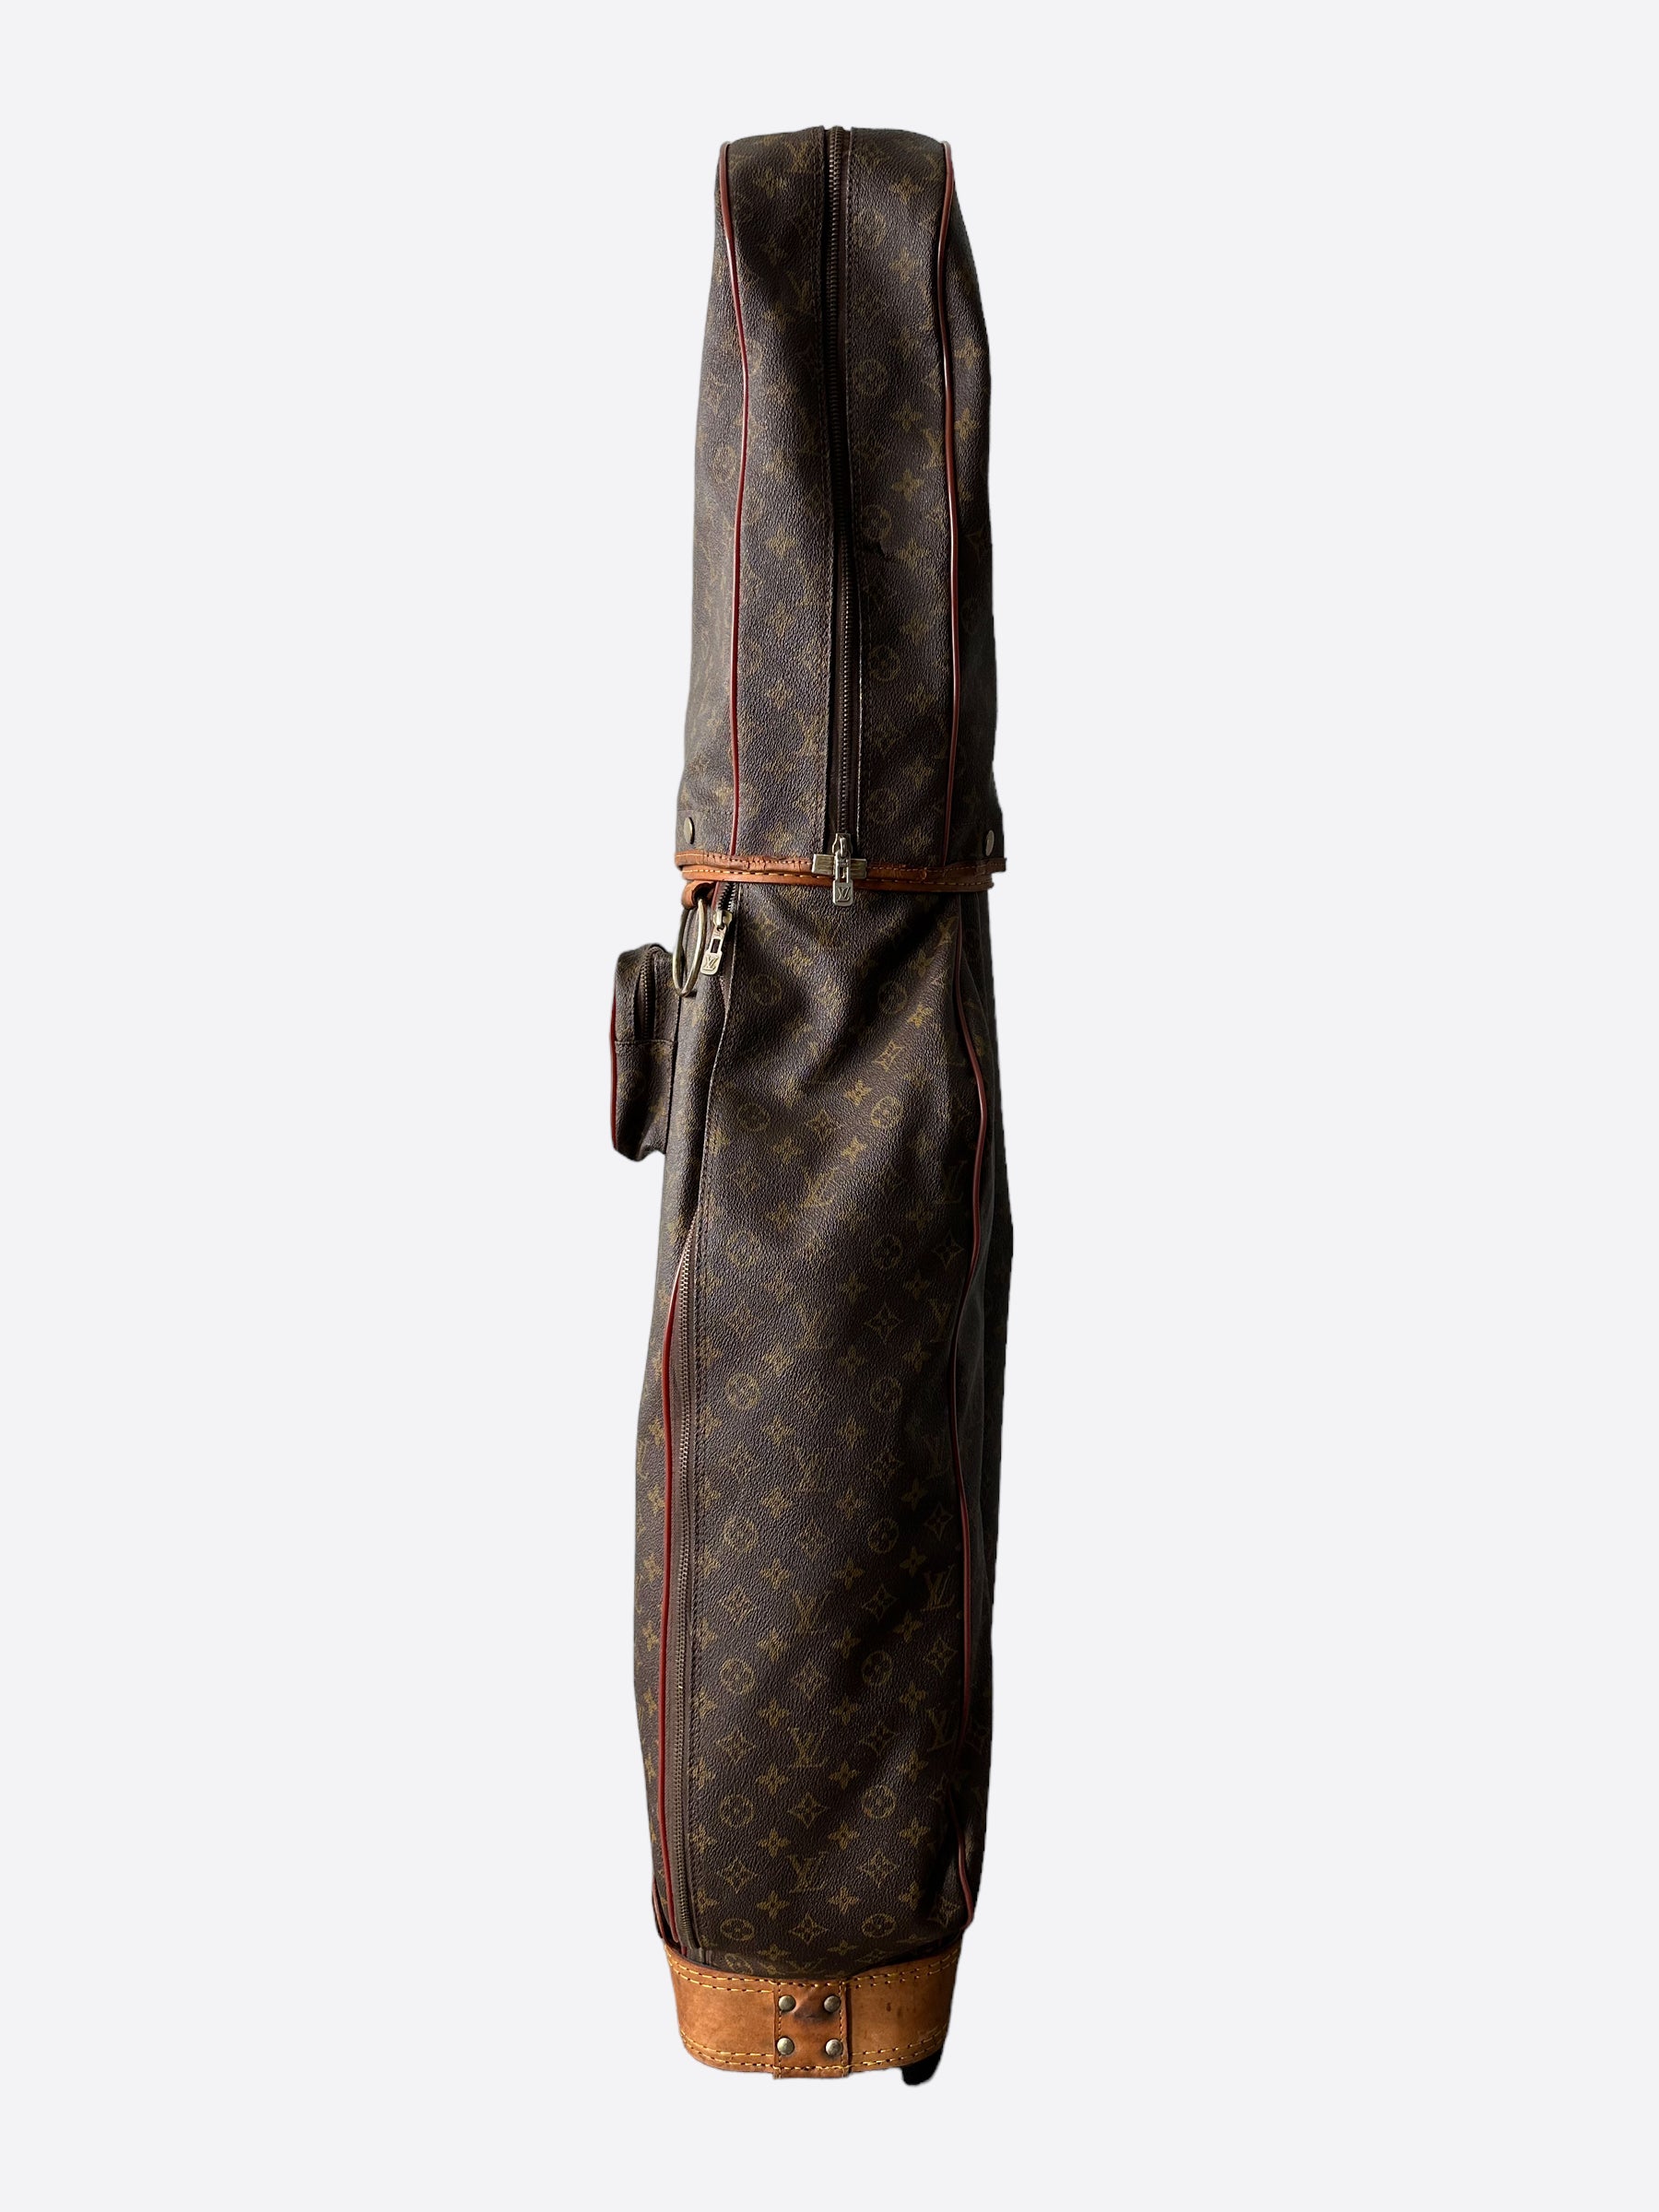 Louis Vuitton Golf Caddy Bag Monogram Brown From Japan